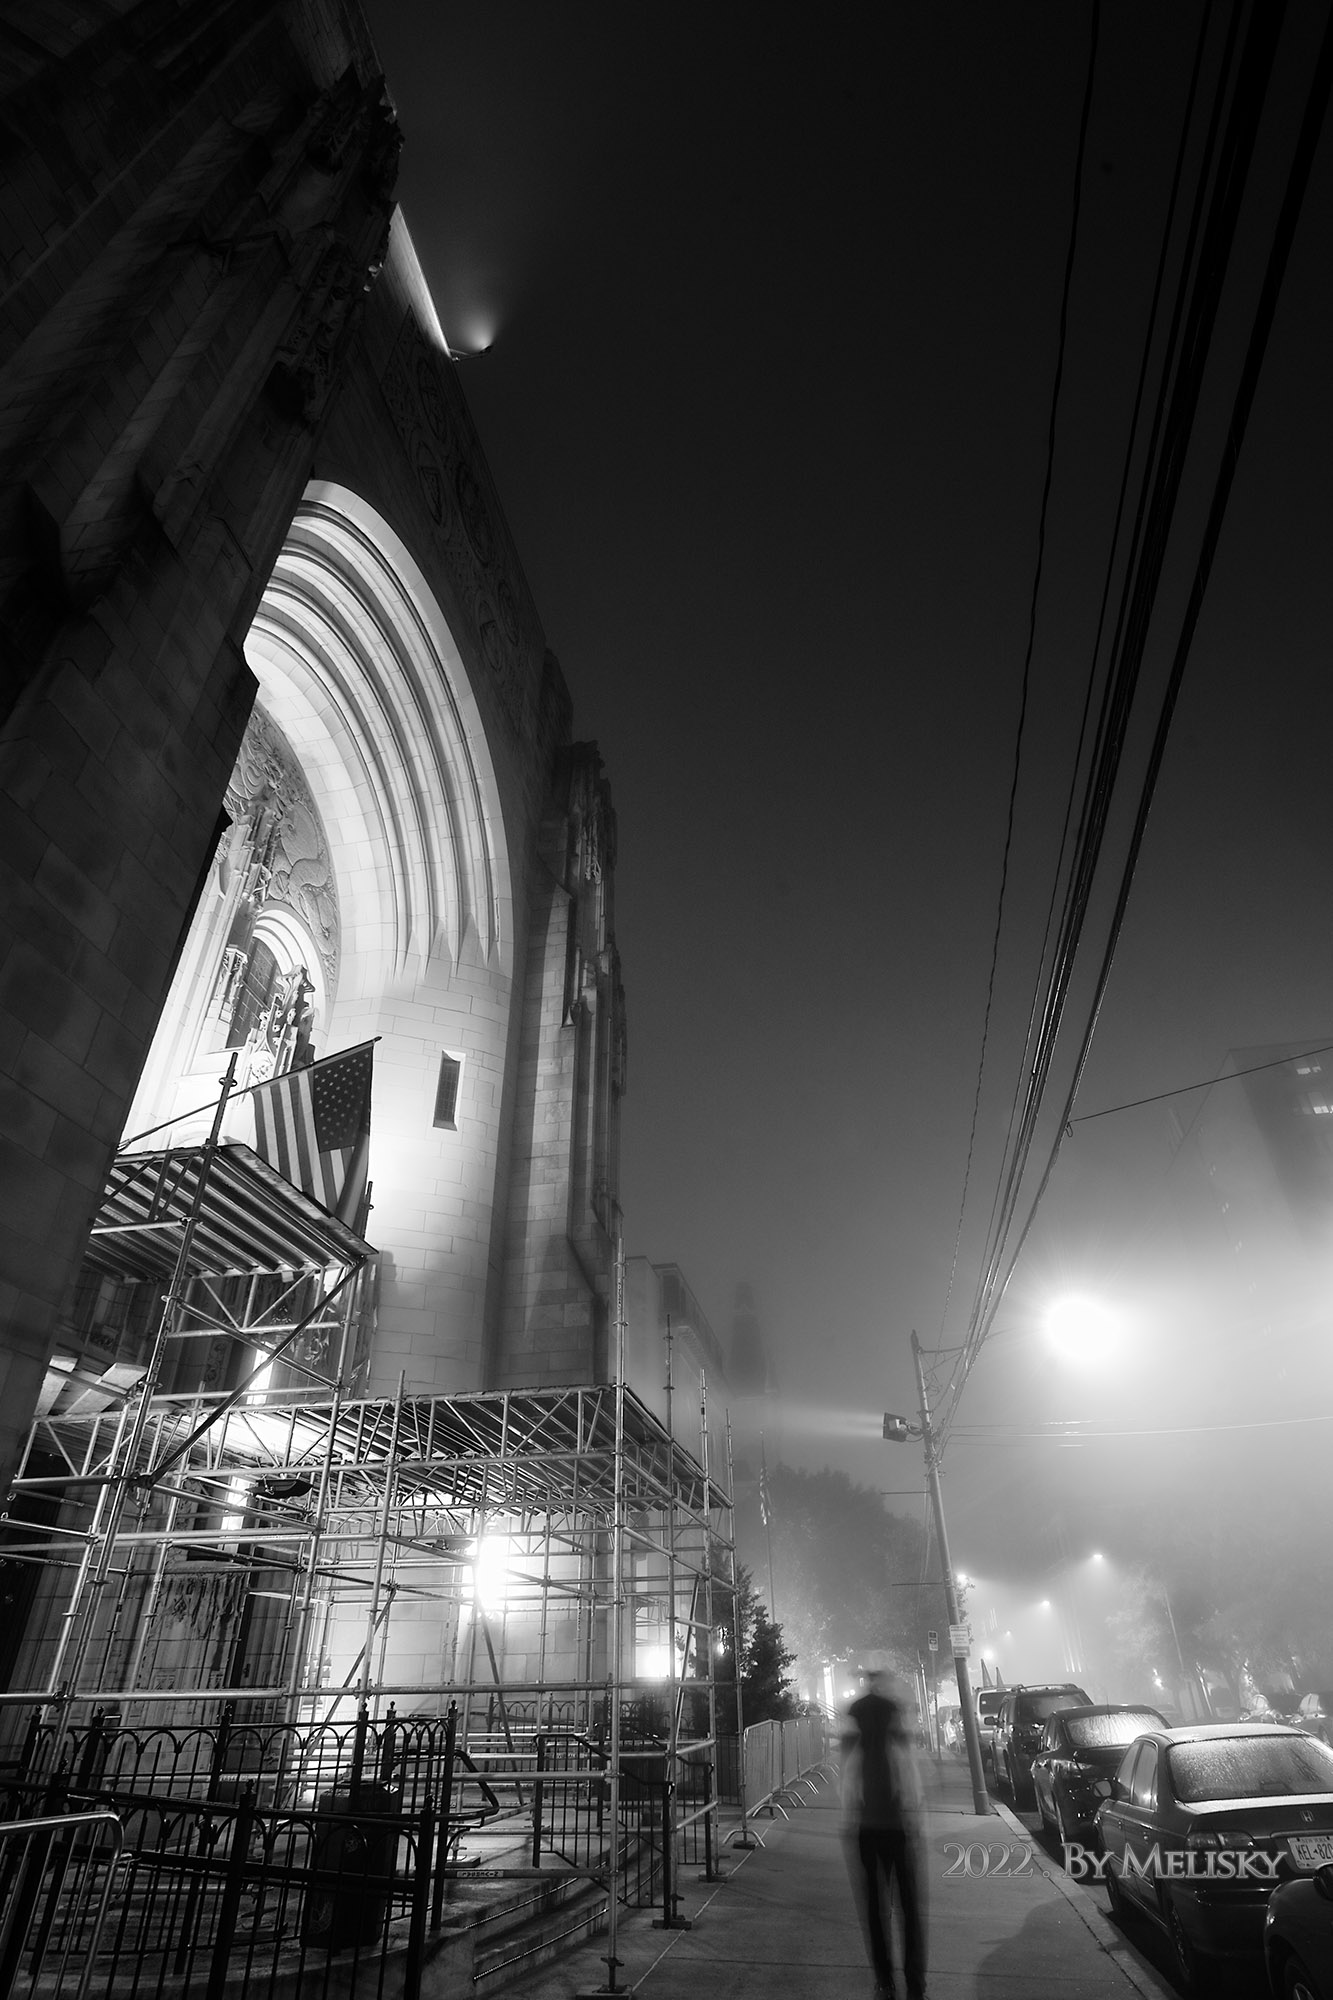 Fog at night in Scranton PA